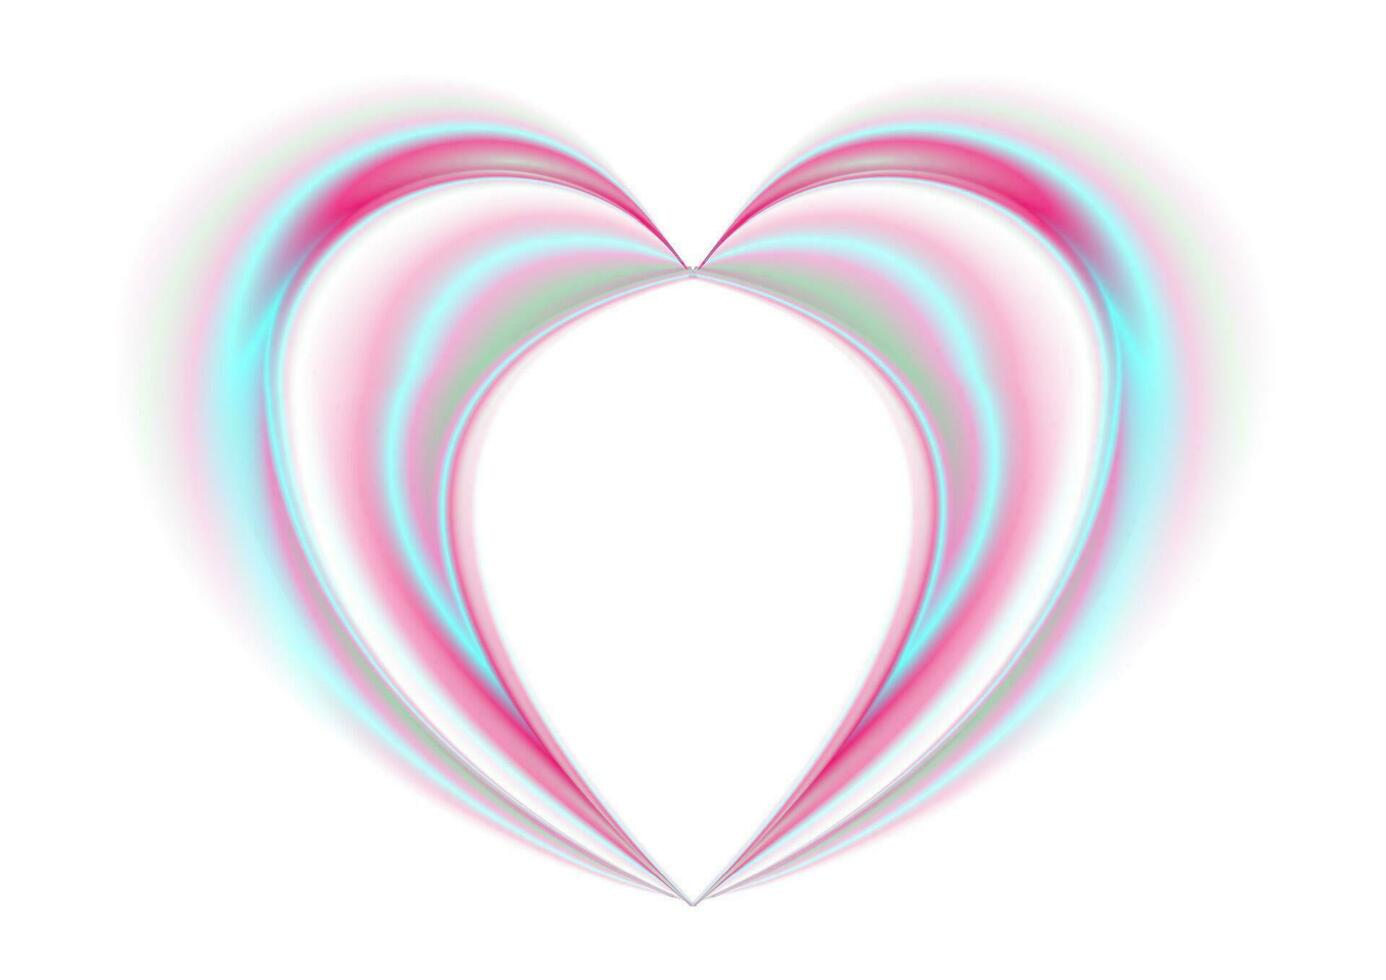 glad holografische abstract hart Aan wit achtergrond vector